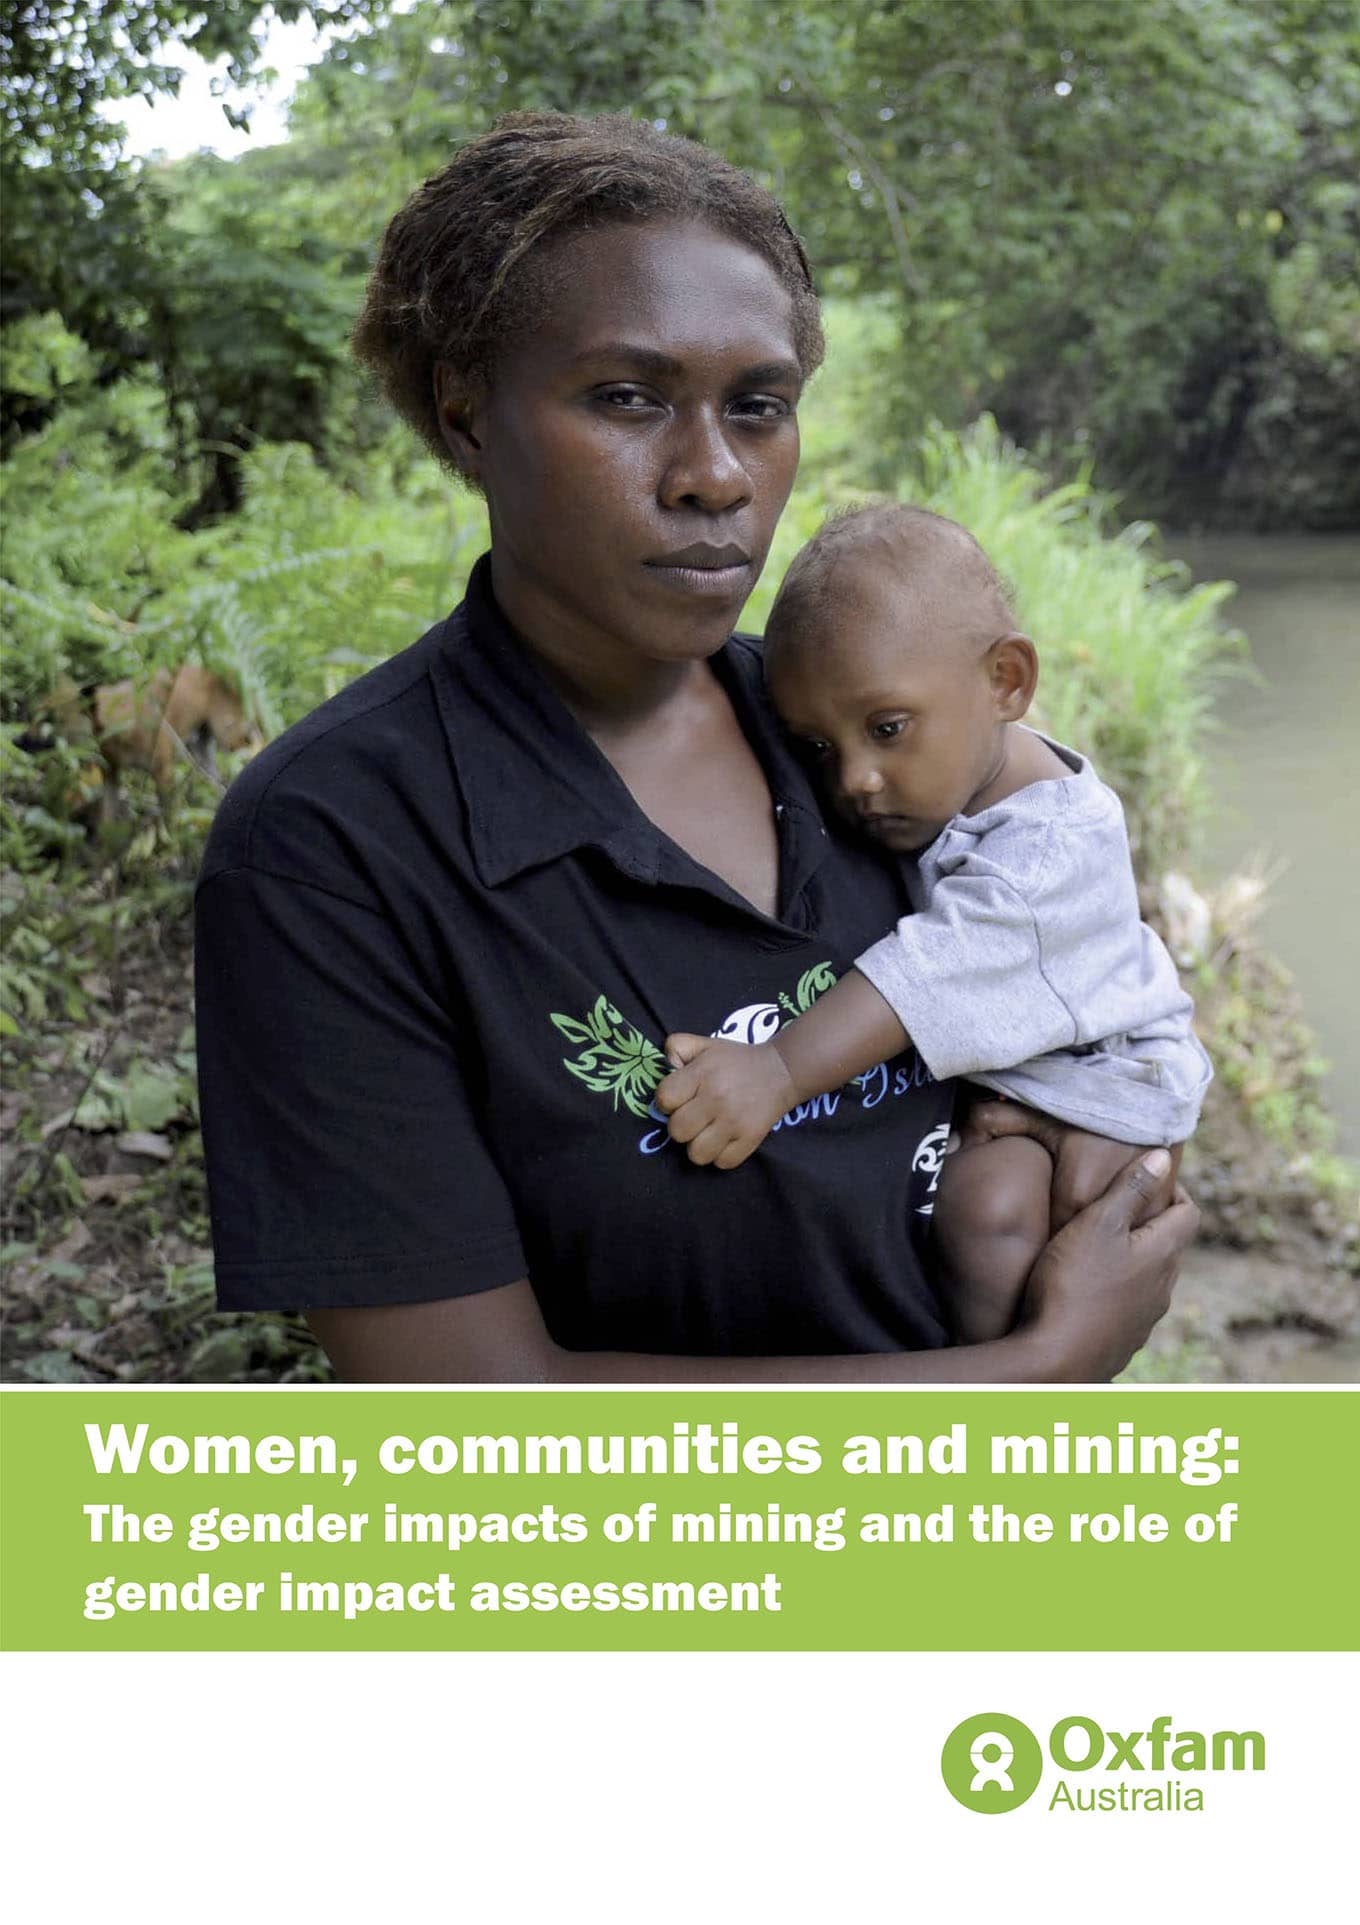 Women, Communities and Mining: The Gender Impacts of Mining and the Role of Gender Impact Assessment (Oxfam Australia, 2009)